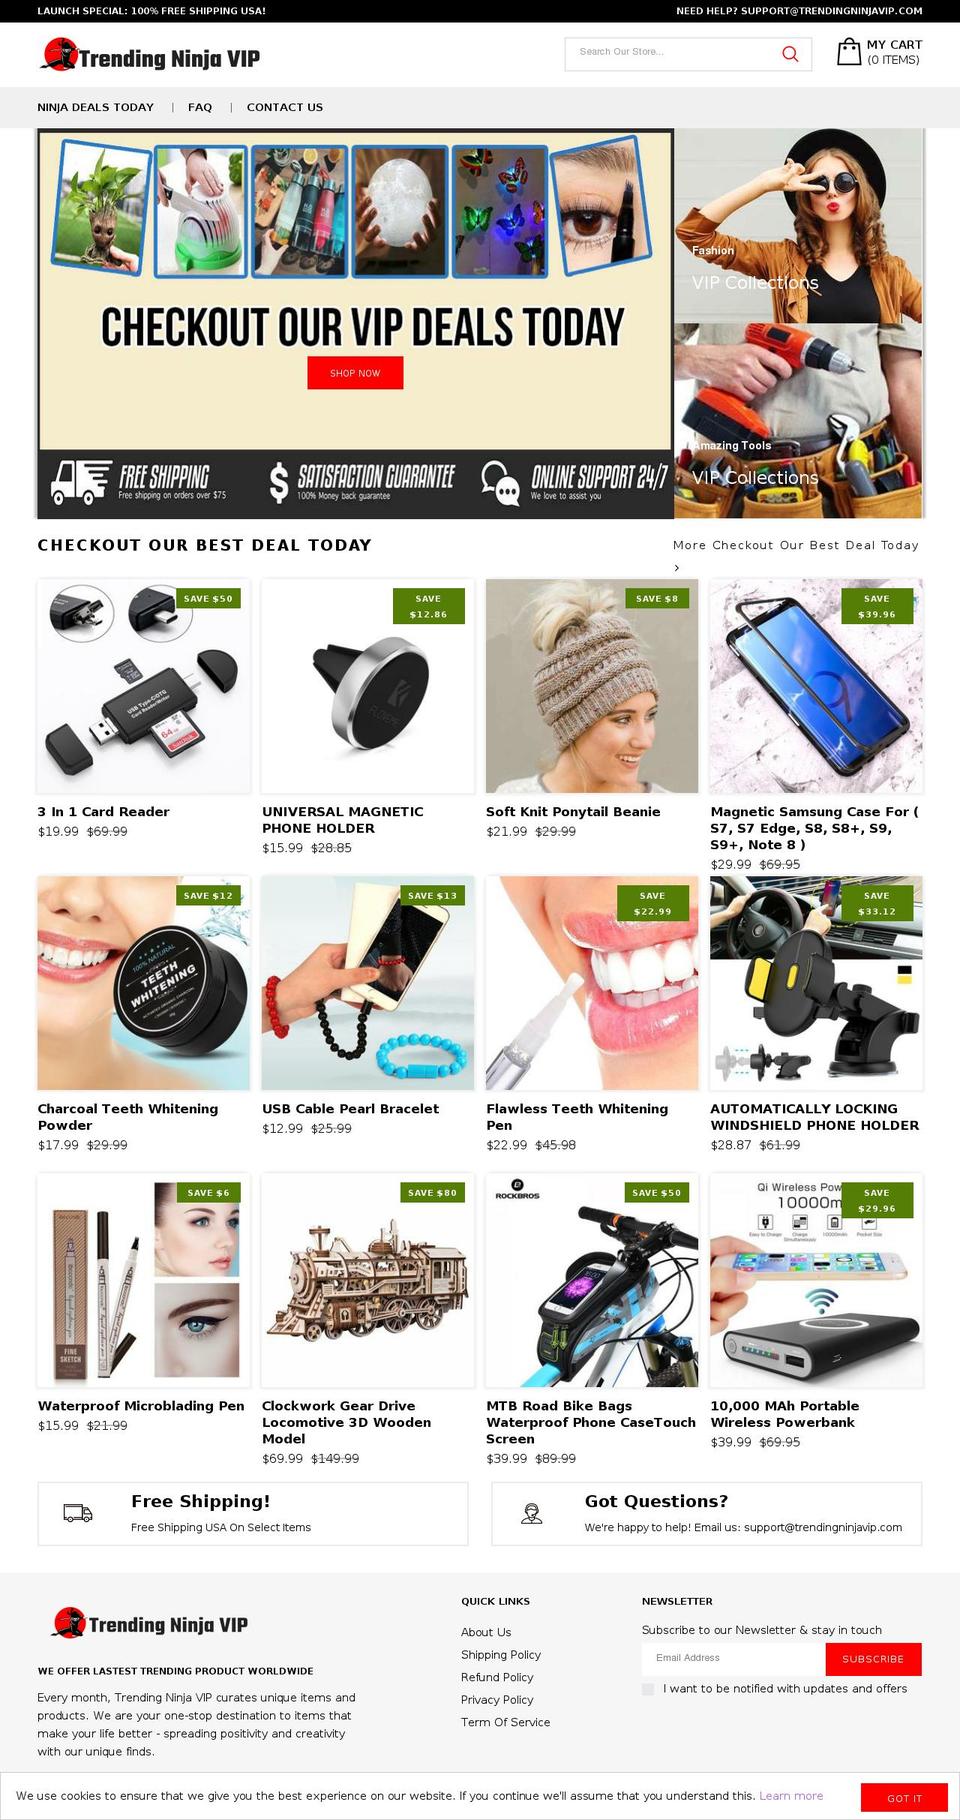 bestsellersproduct.com shopify website screenshot